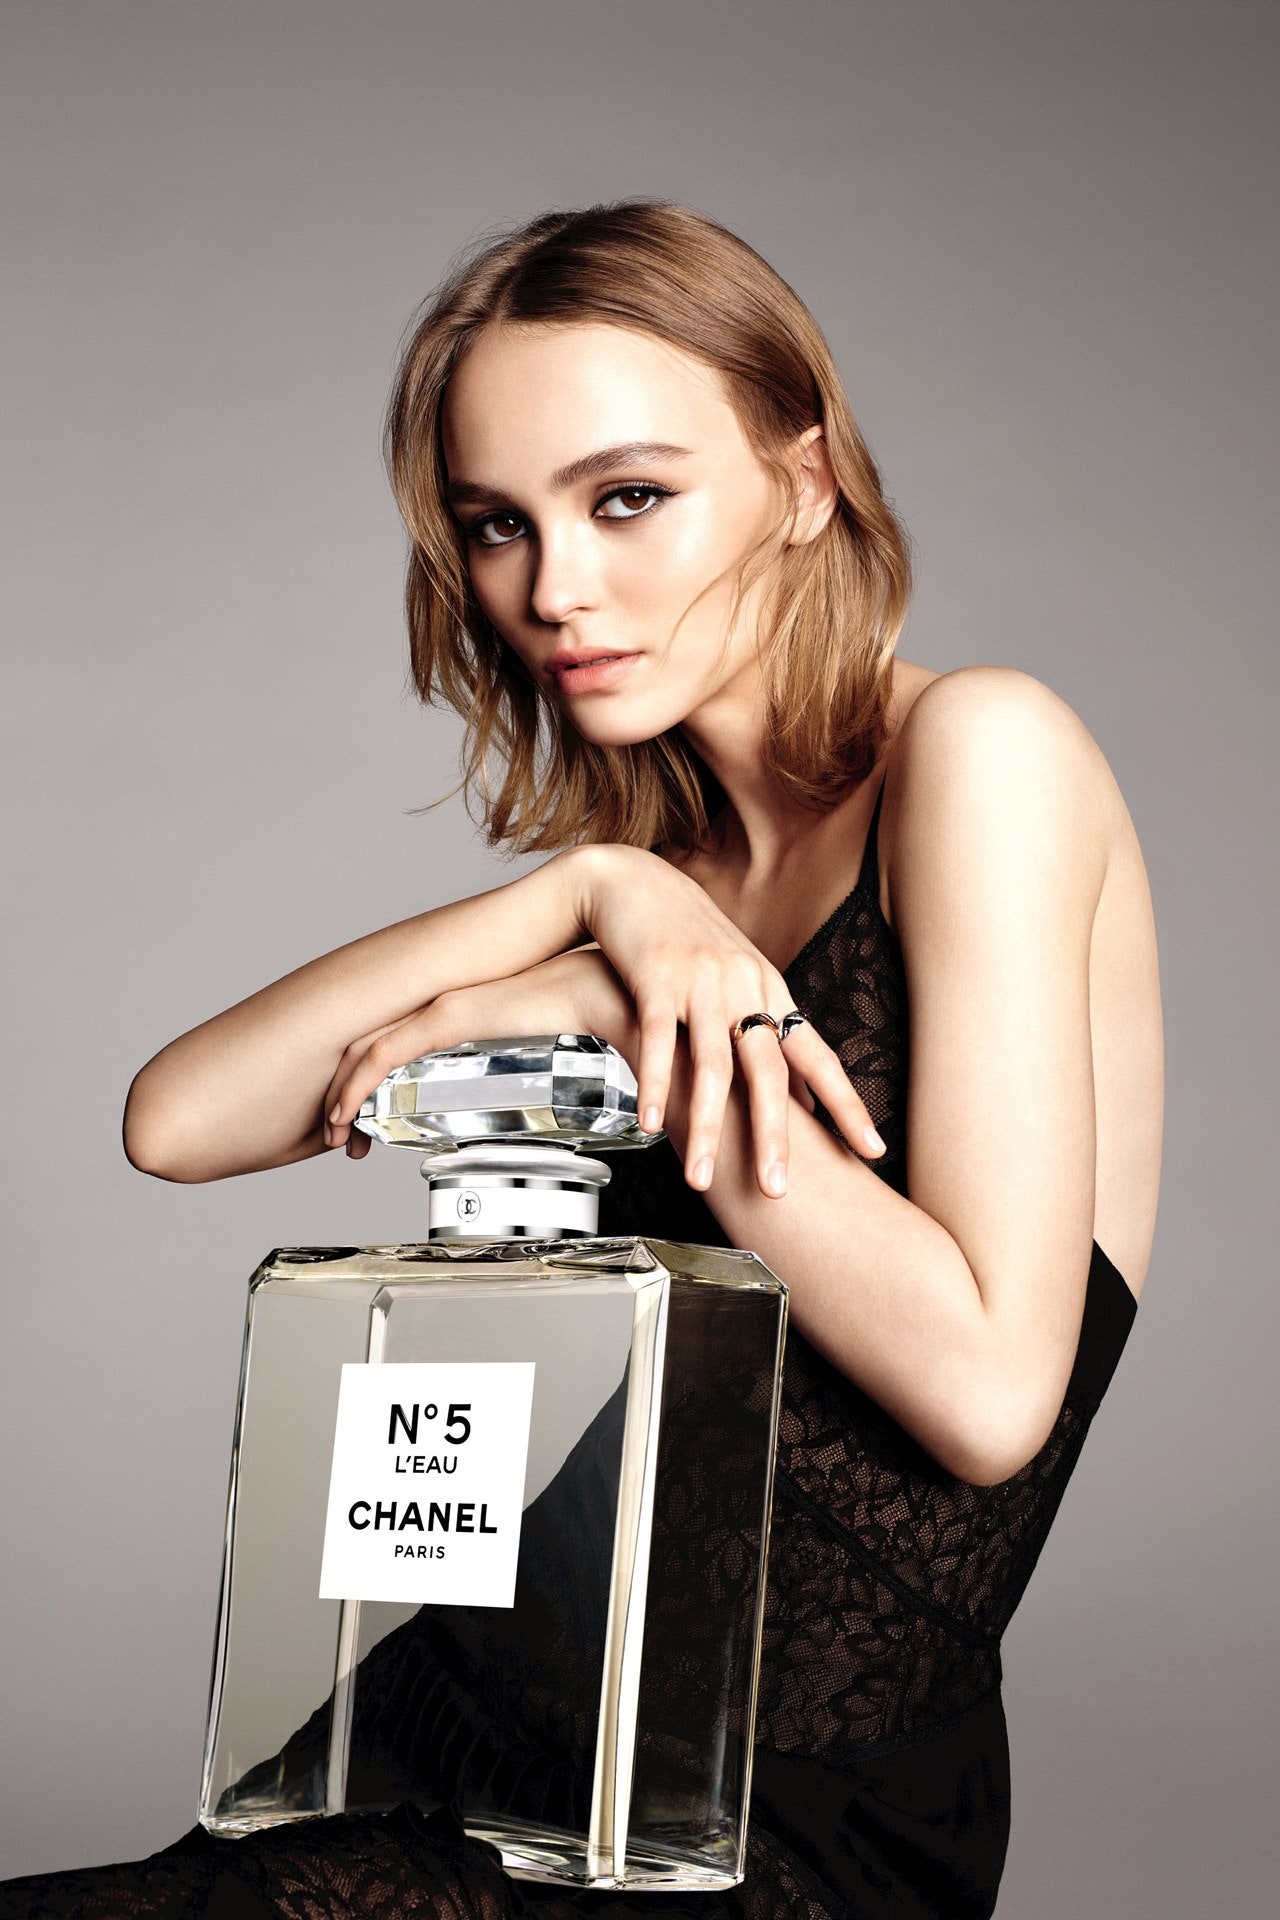 Chanel No5 Leau for women Linh Perfume